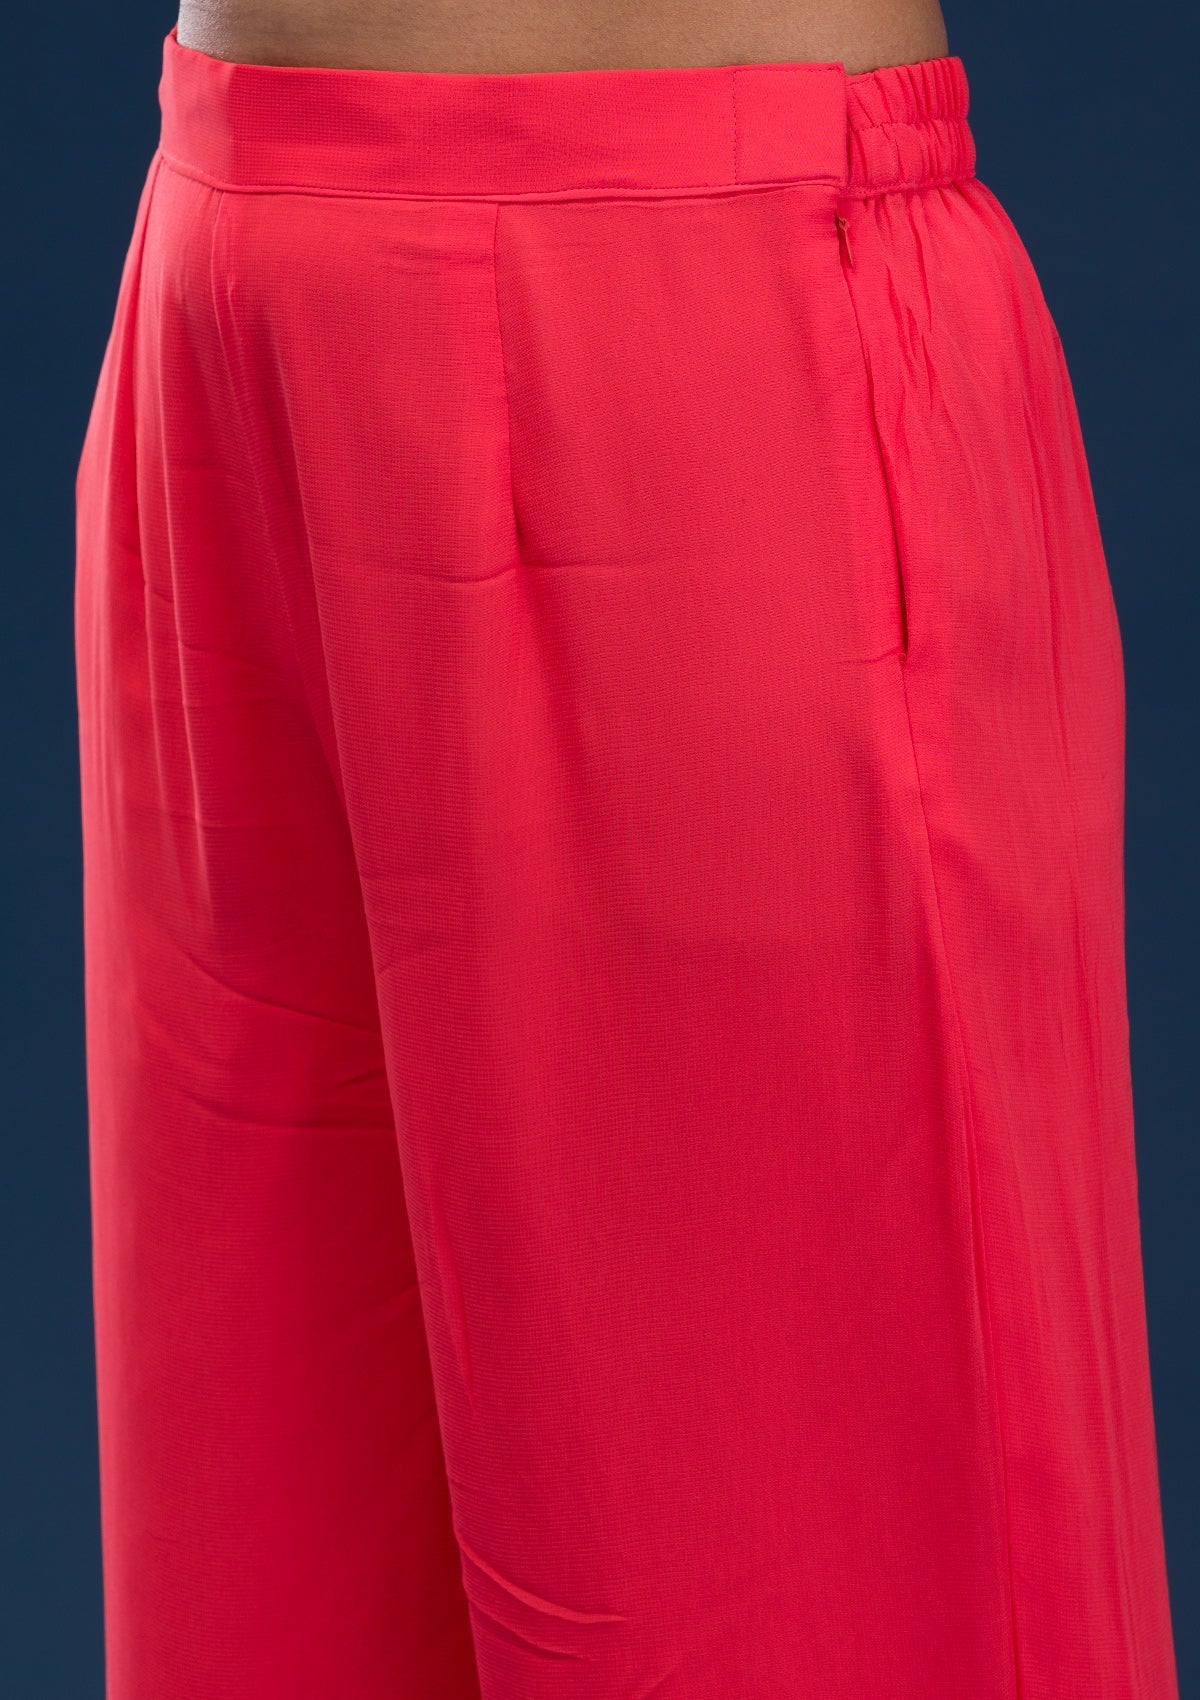 Red Printed Chiffon Readymade Salwar Suit-Koskii